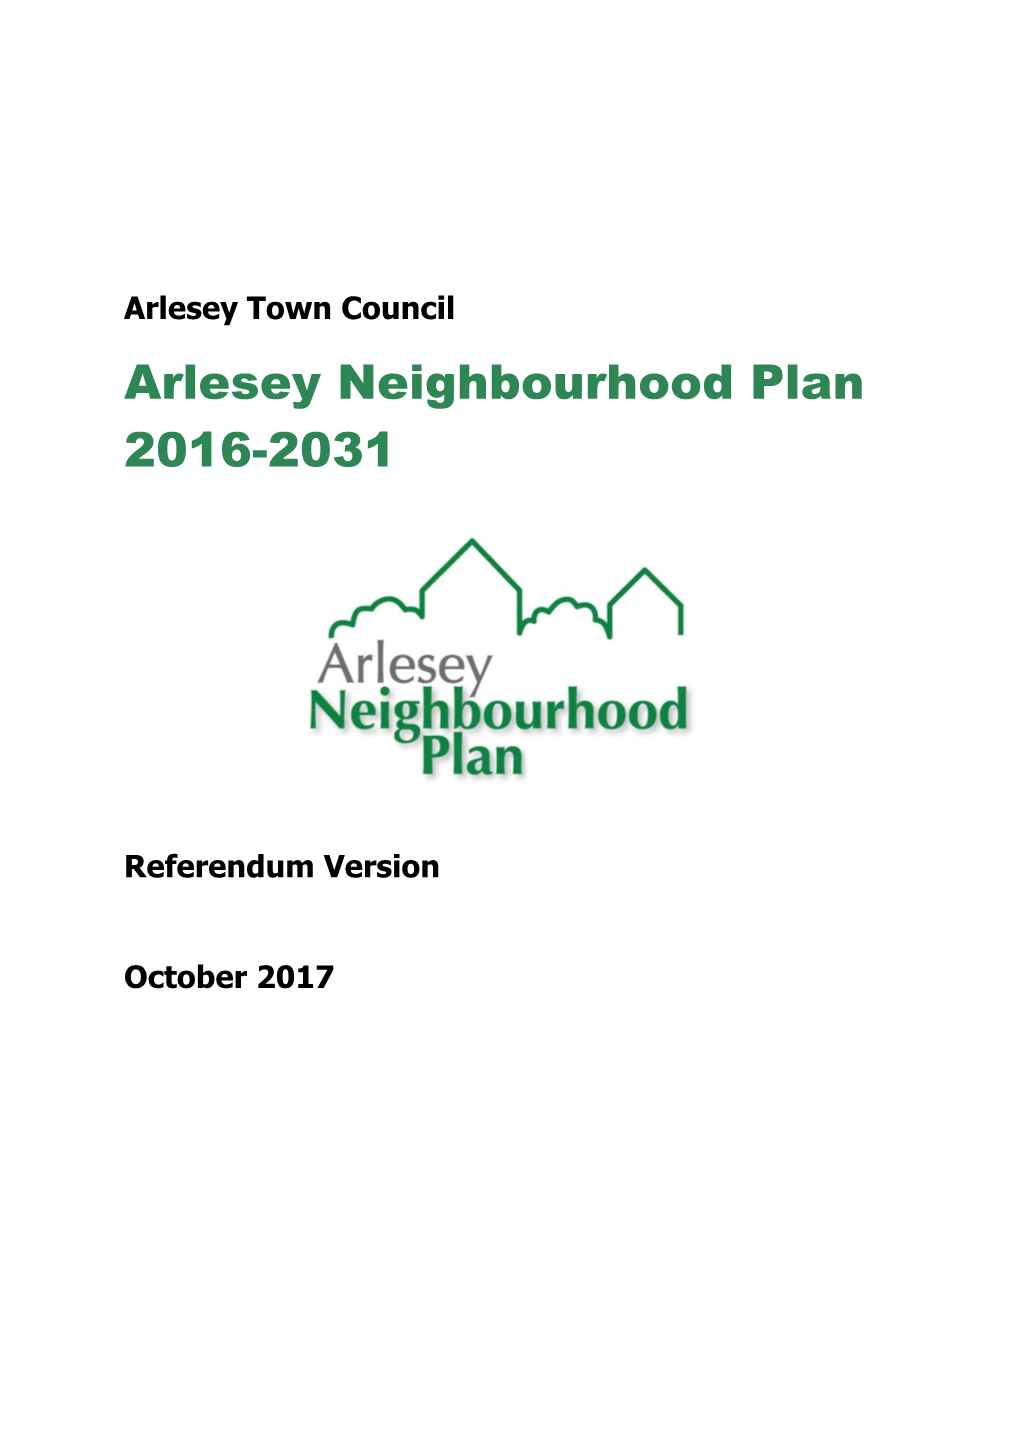 Arlesey Neighbourhood Plan 2016-2031